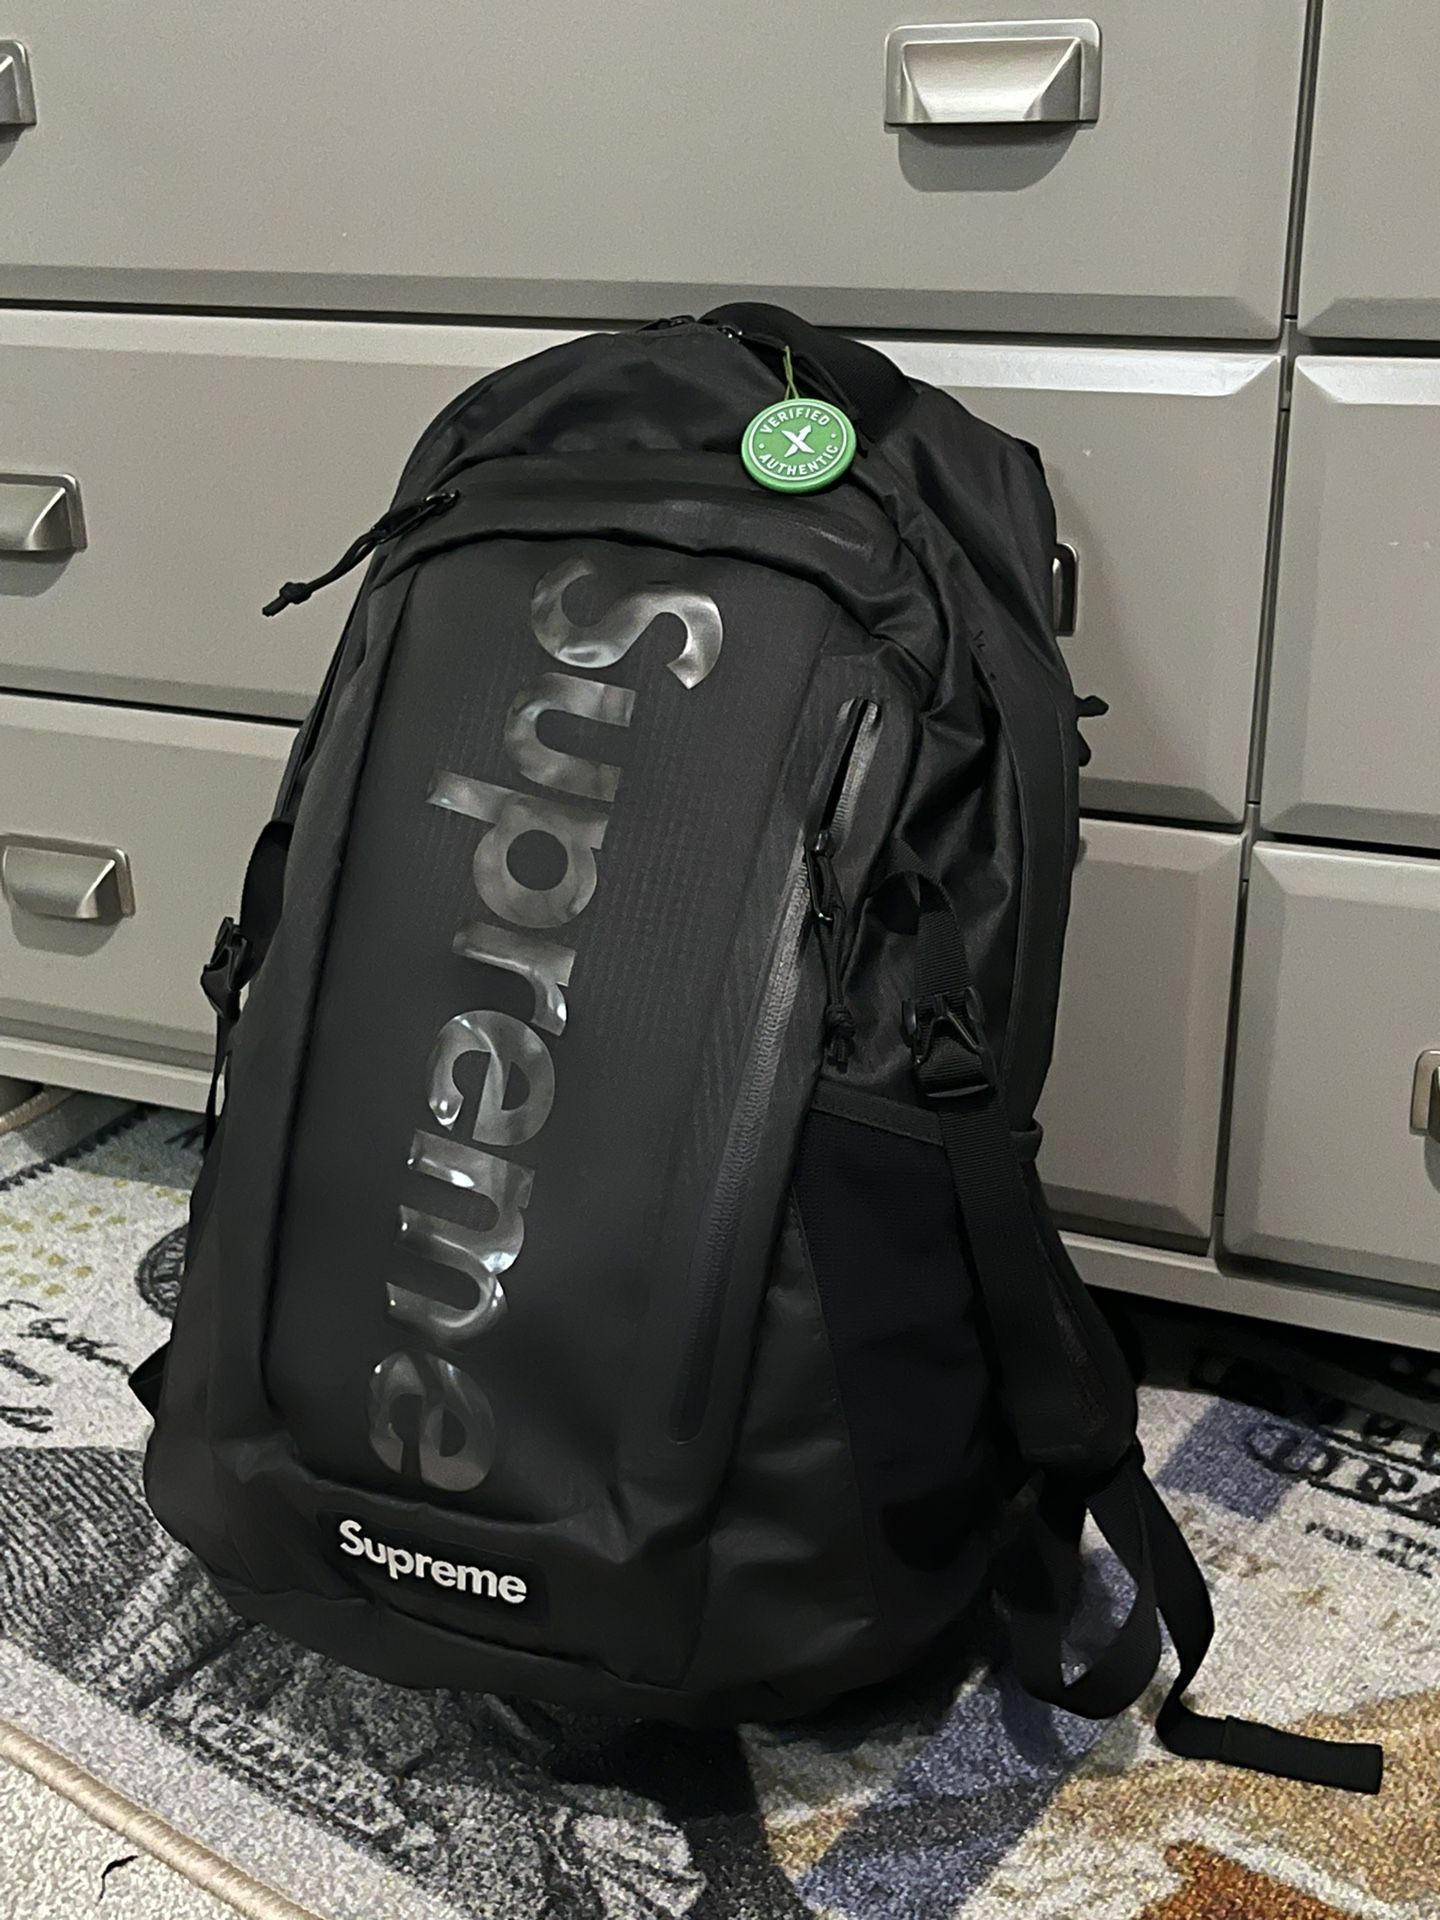 Supreme, Bags, Supreme Backpack Ss7